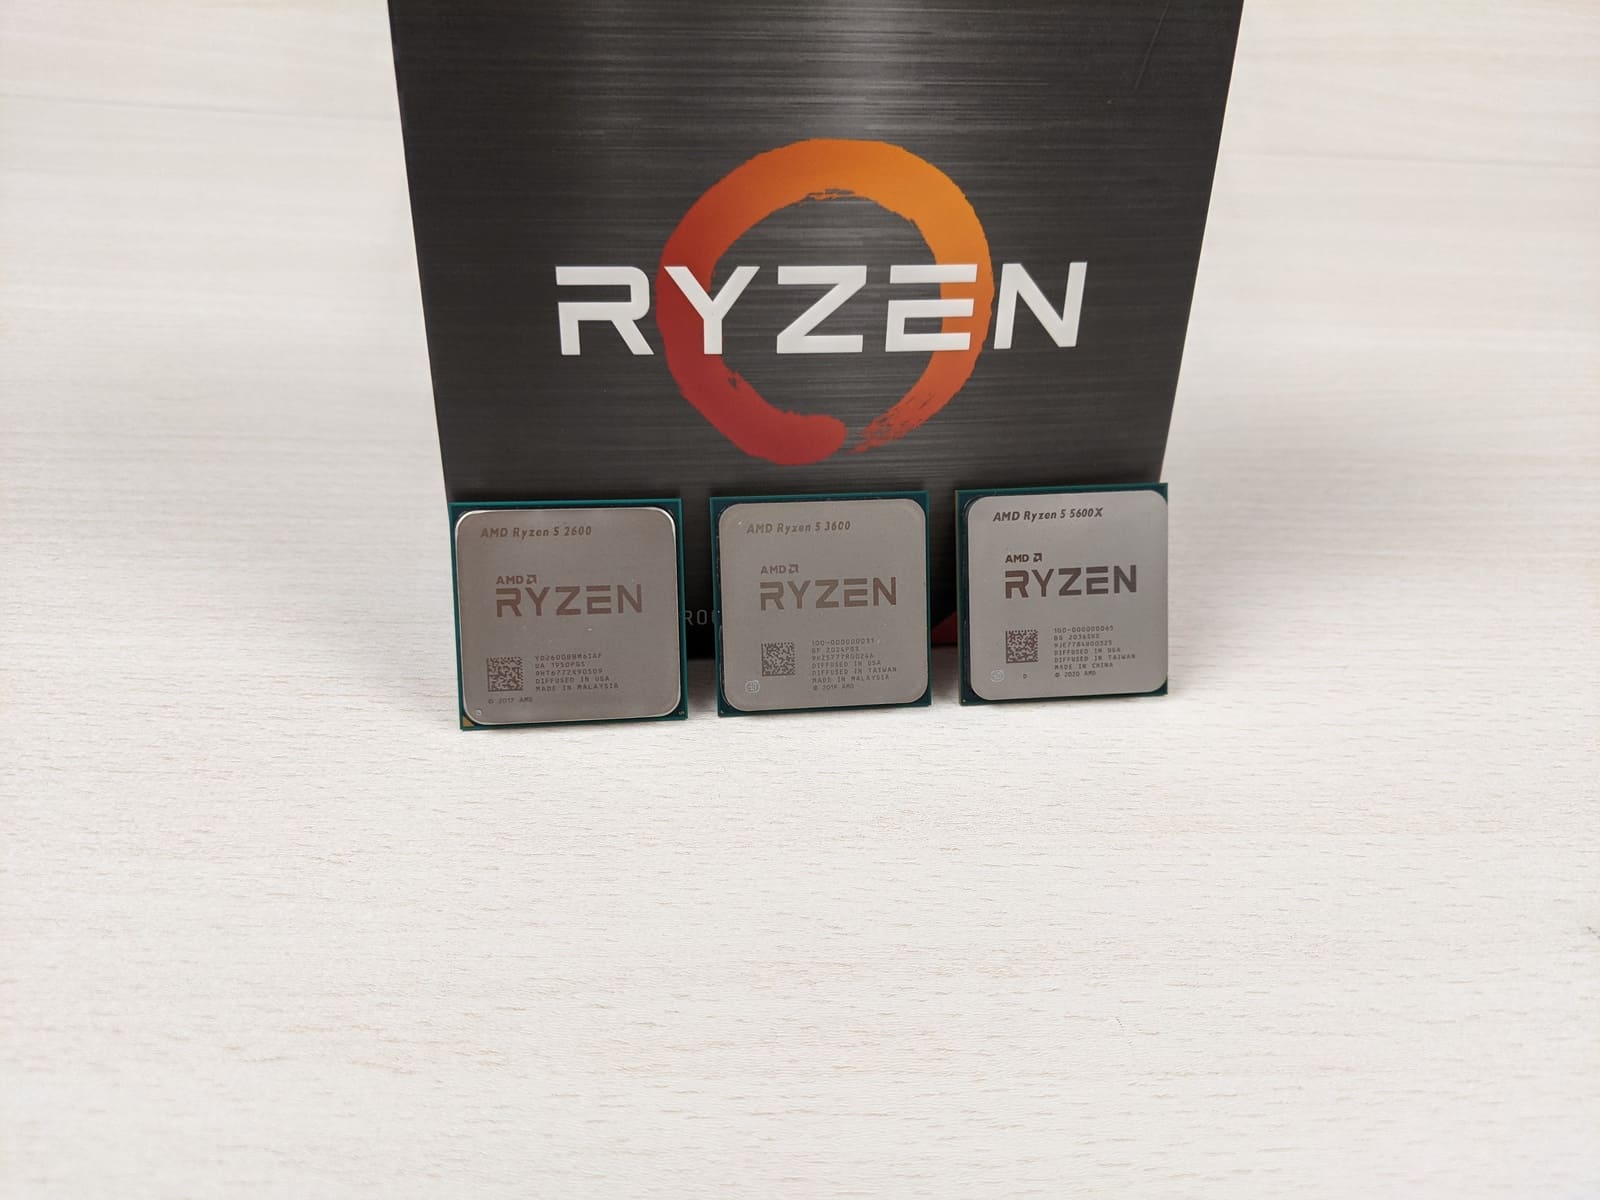 Amd ryzen 5600 x. AMD Ryzen 5 3600 OEM. Ryzen 5 5600x. Процессор AMD Ryzen 5 5600x OEM. AMD Ryzen 5 2600.